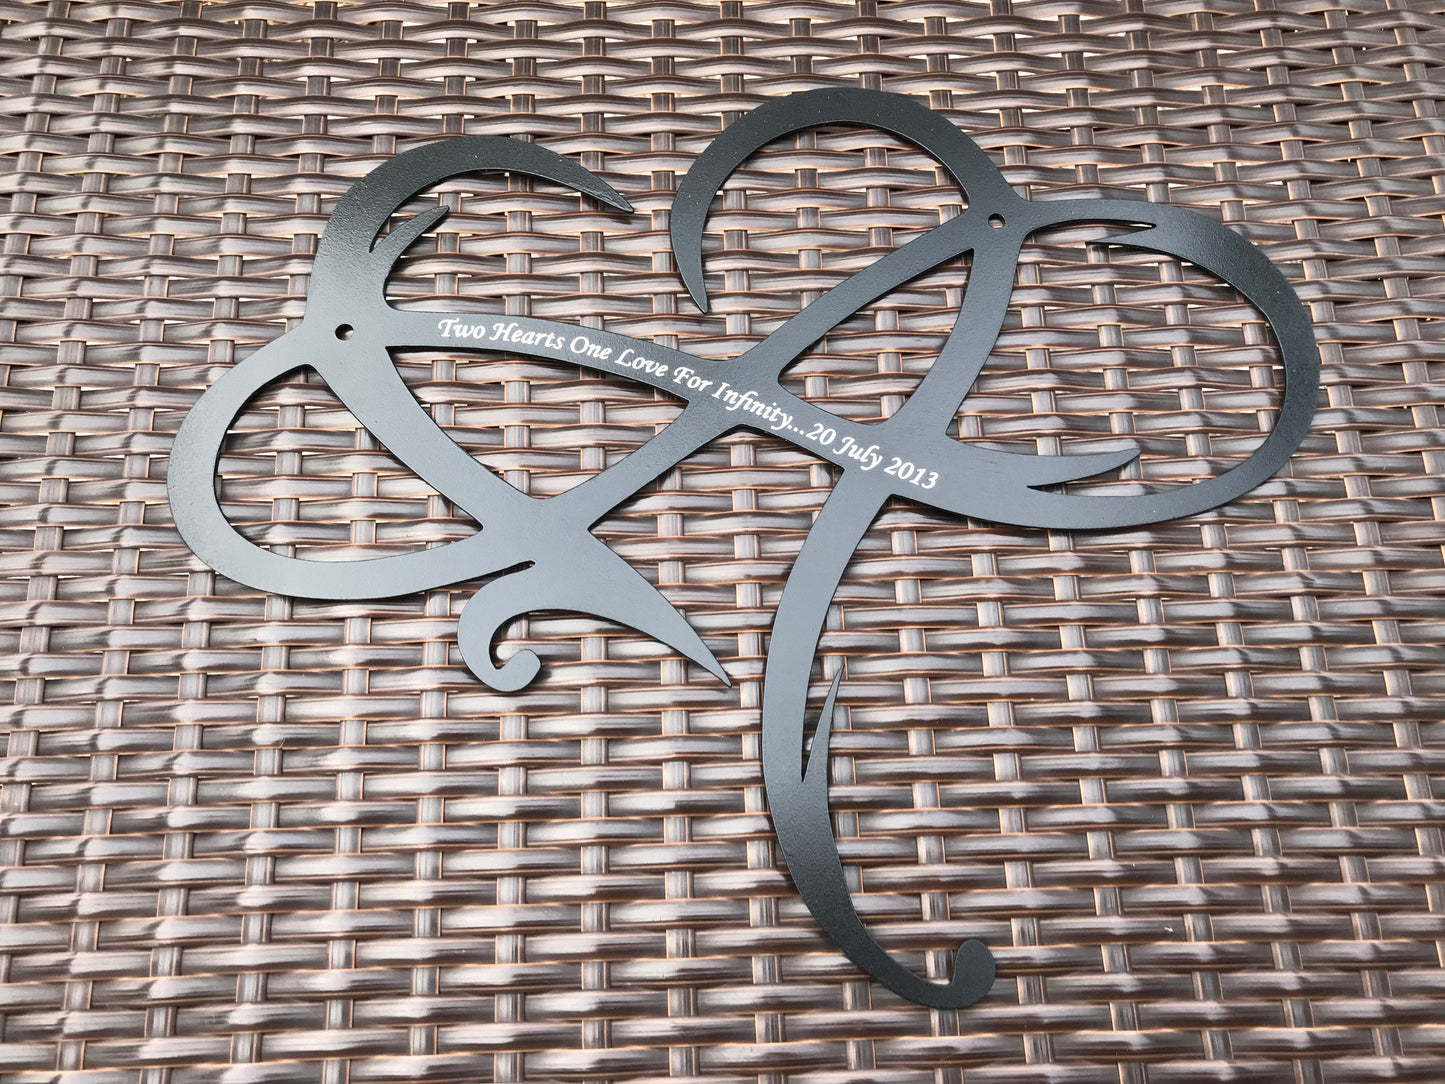 Iron gift, 6 year anniversary, 6th anniversary, engraved iron gift, heart, infinity sign, iron anniversary gift, iron heart, iron infinity